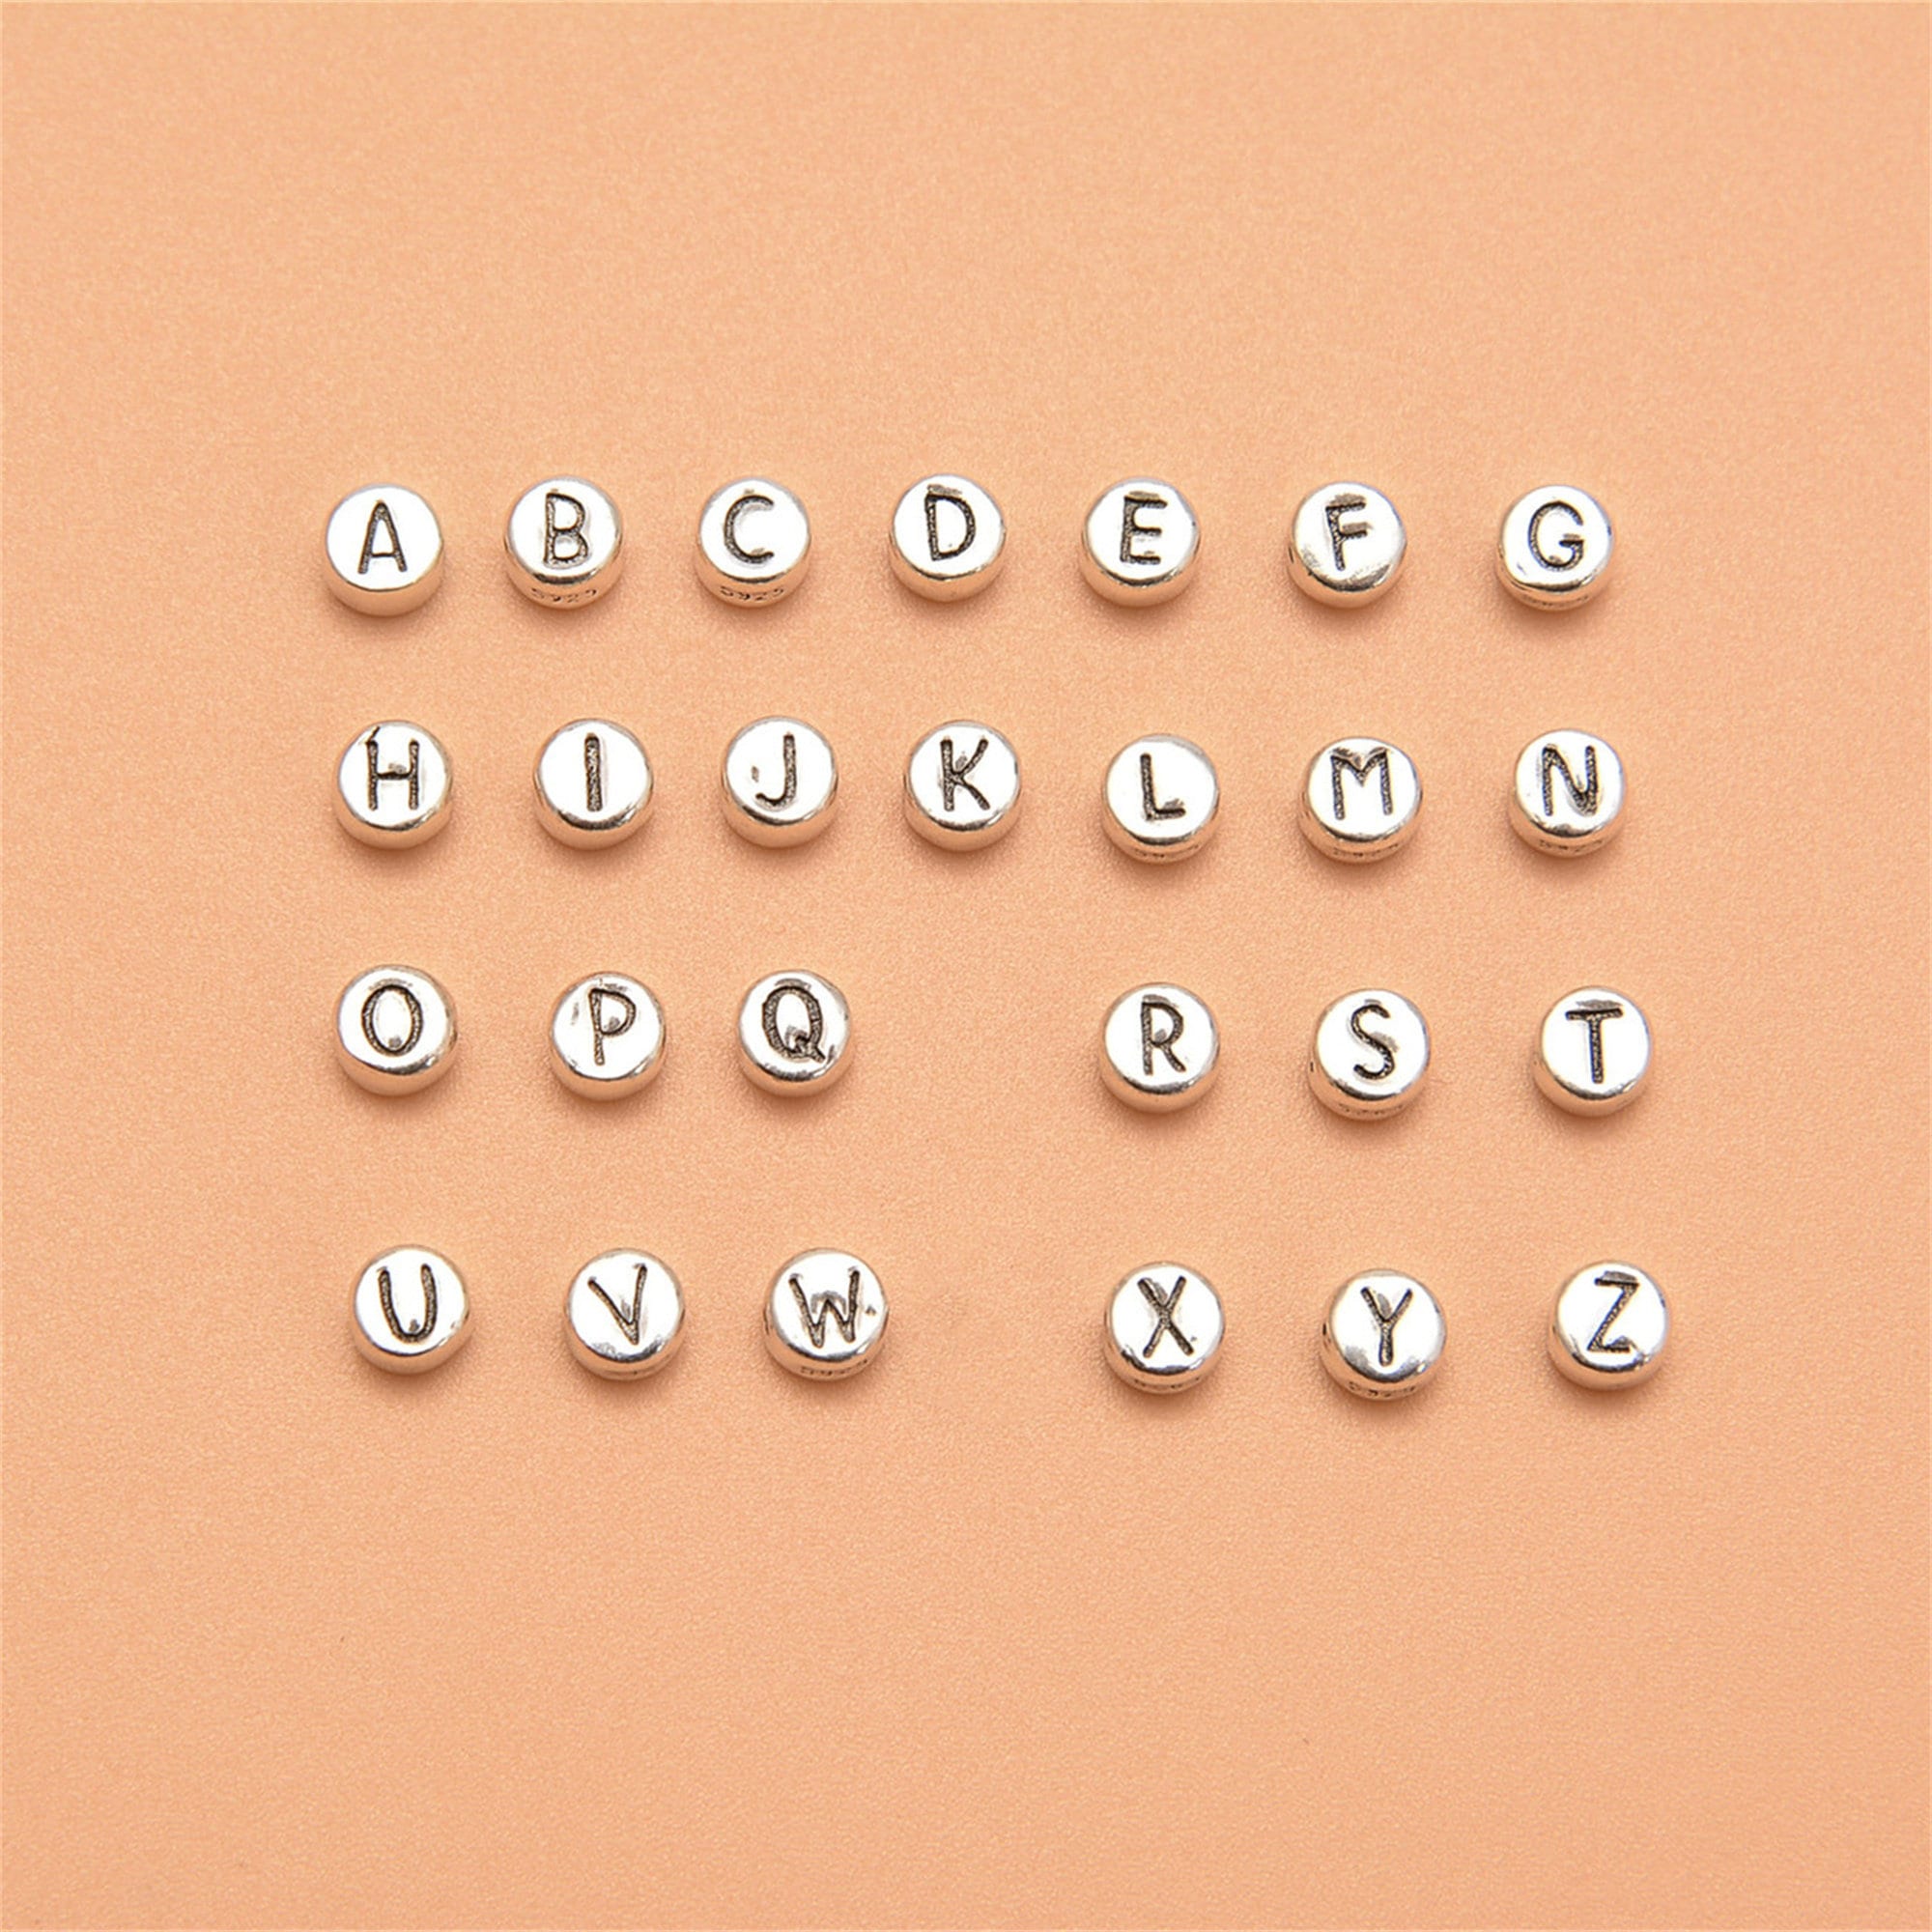 Alphabet Beads 7mm 250/Pkg-White Round With Black Letter, 1 - City